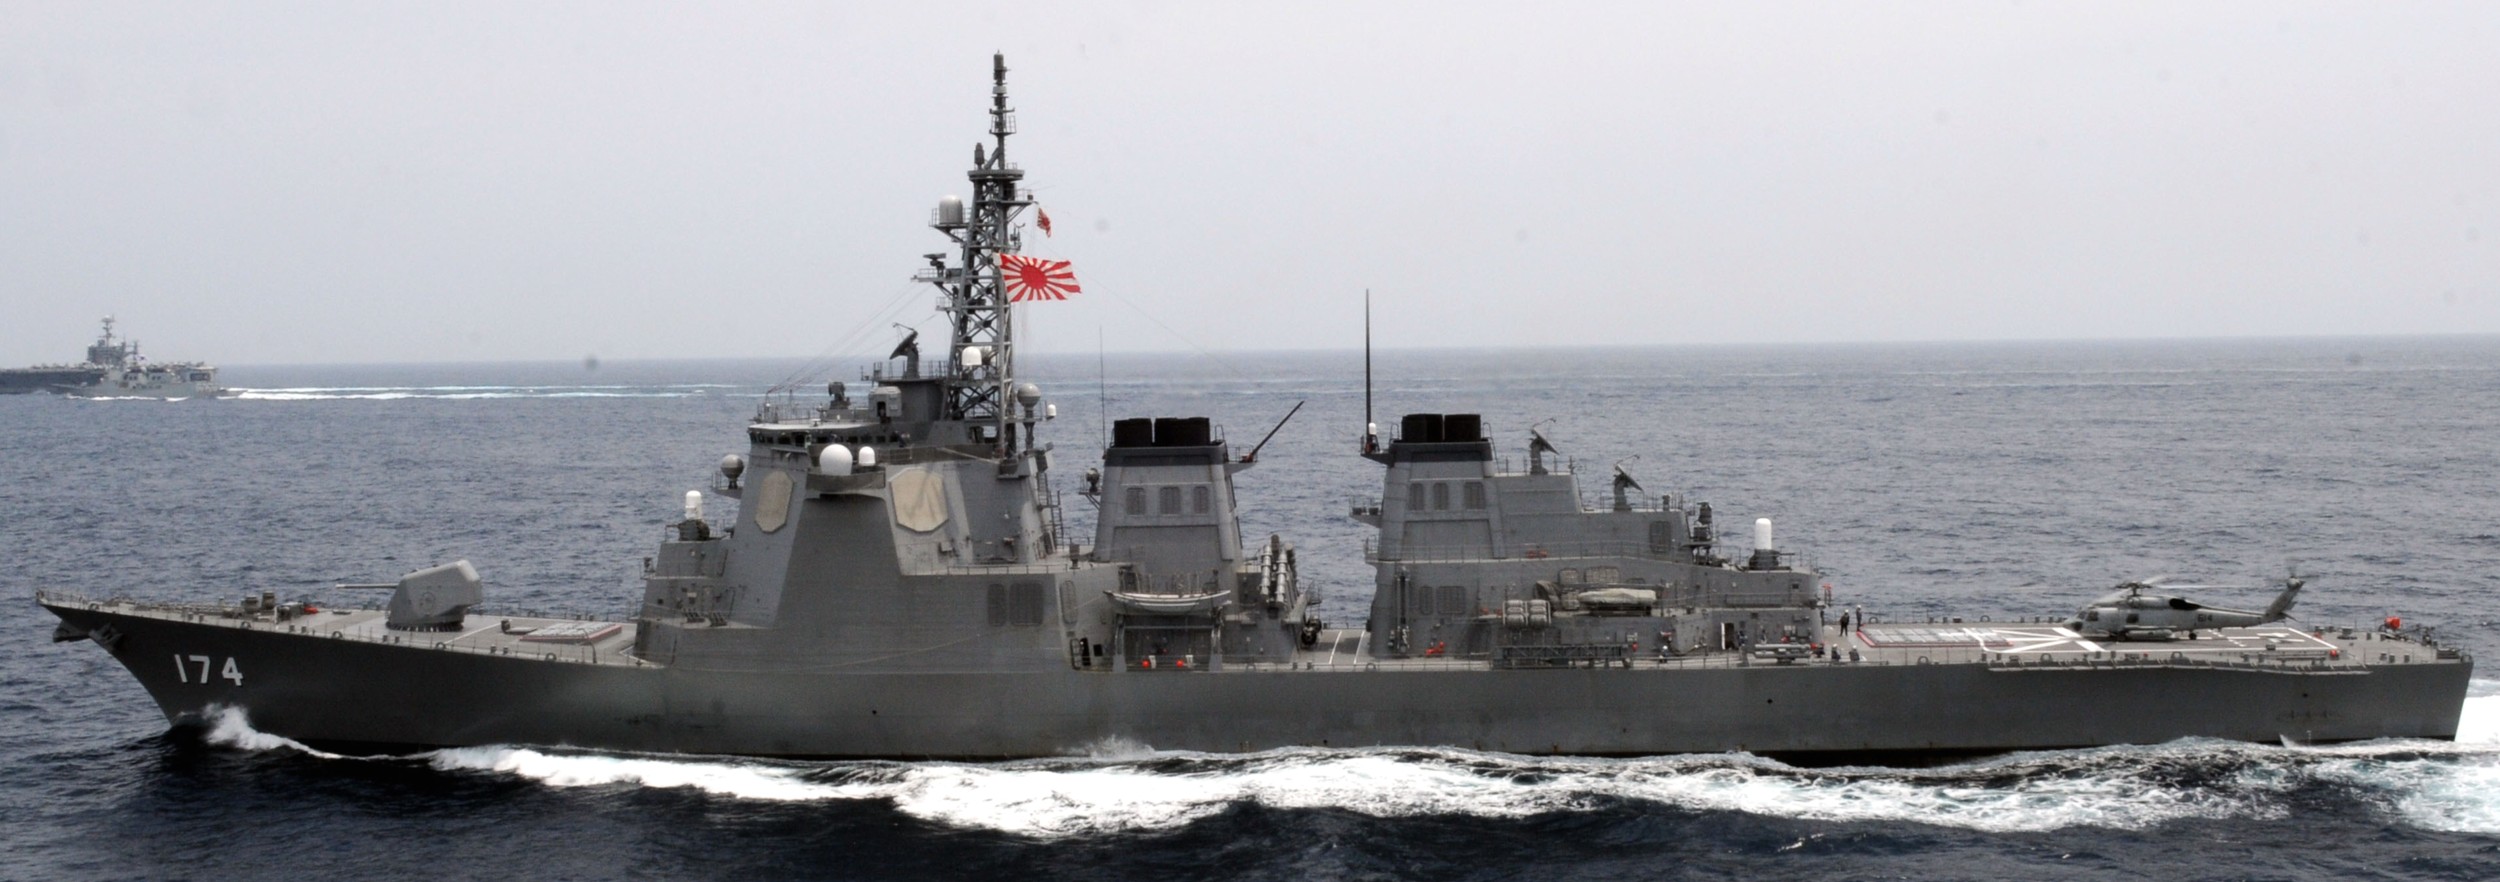 ddg-174 js kirishima kongo class guided missile destroyer aegis japan maritime self defense force jmsdf 50